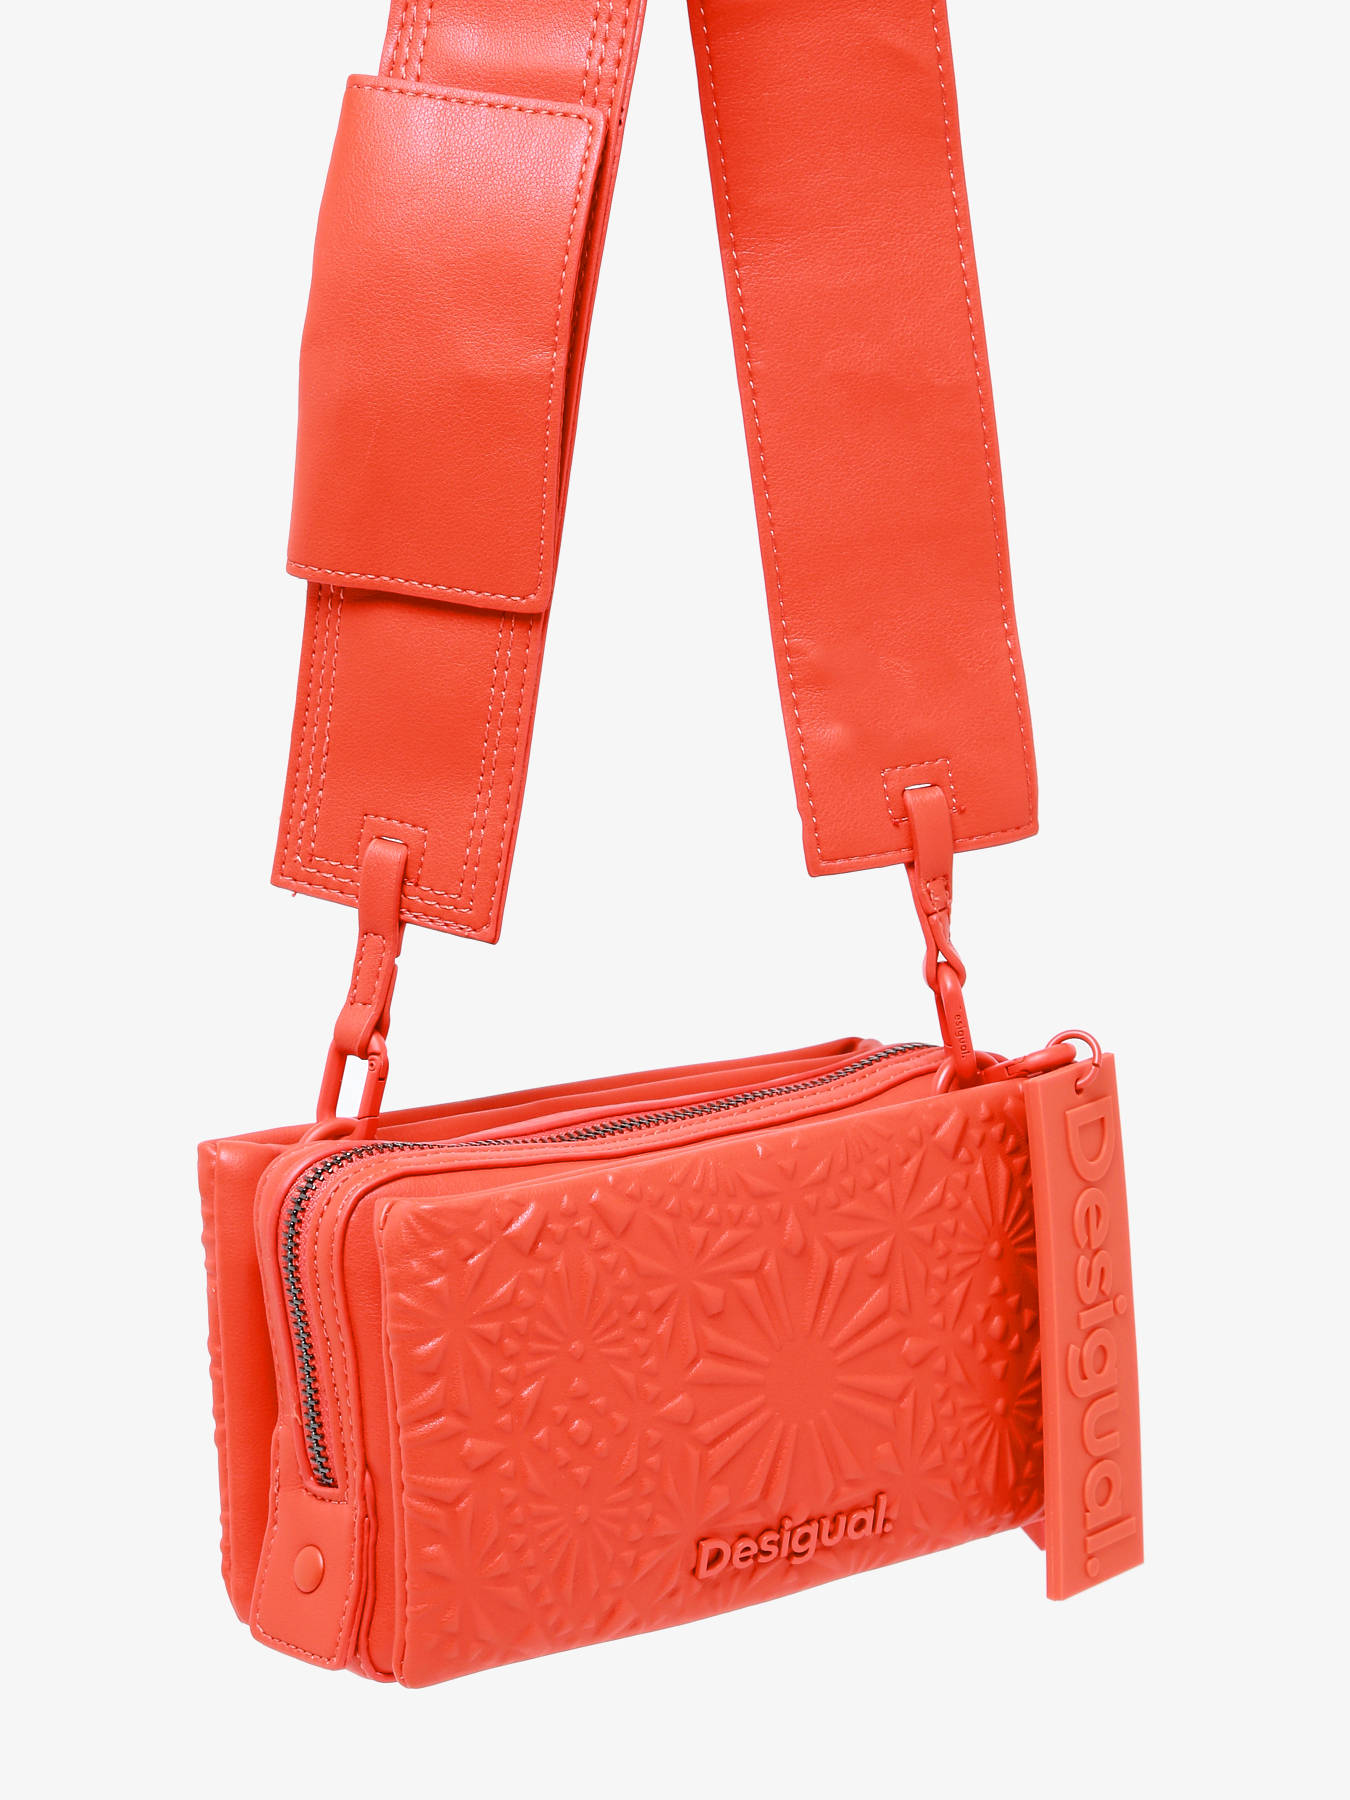 What brand of handbag should I buy for my wife: Coach, Furla, or Michael  Kors? - Quora